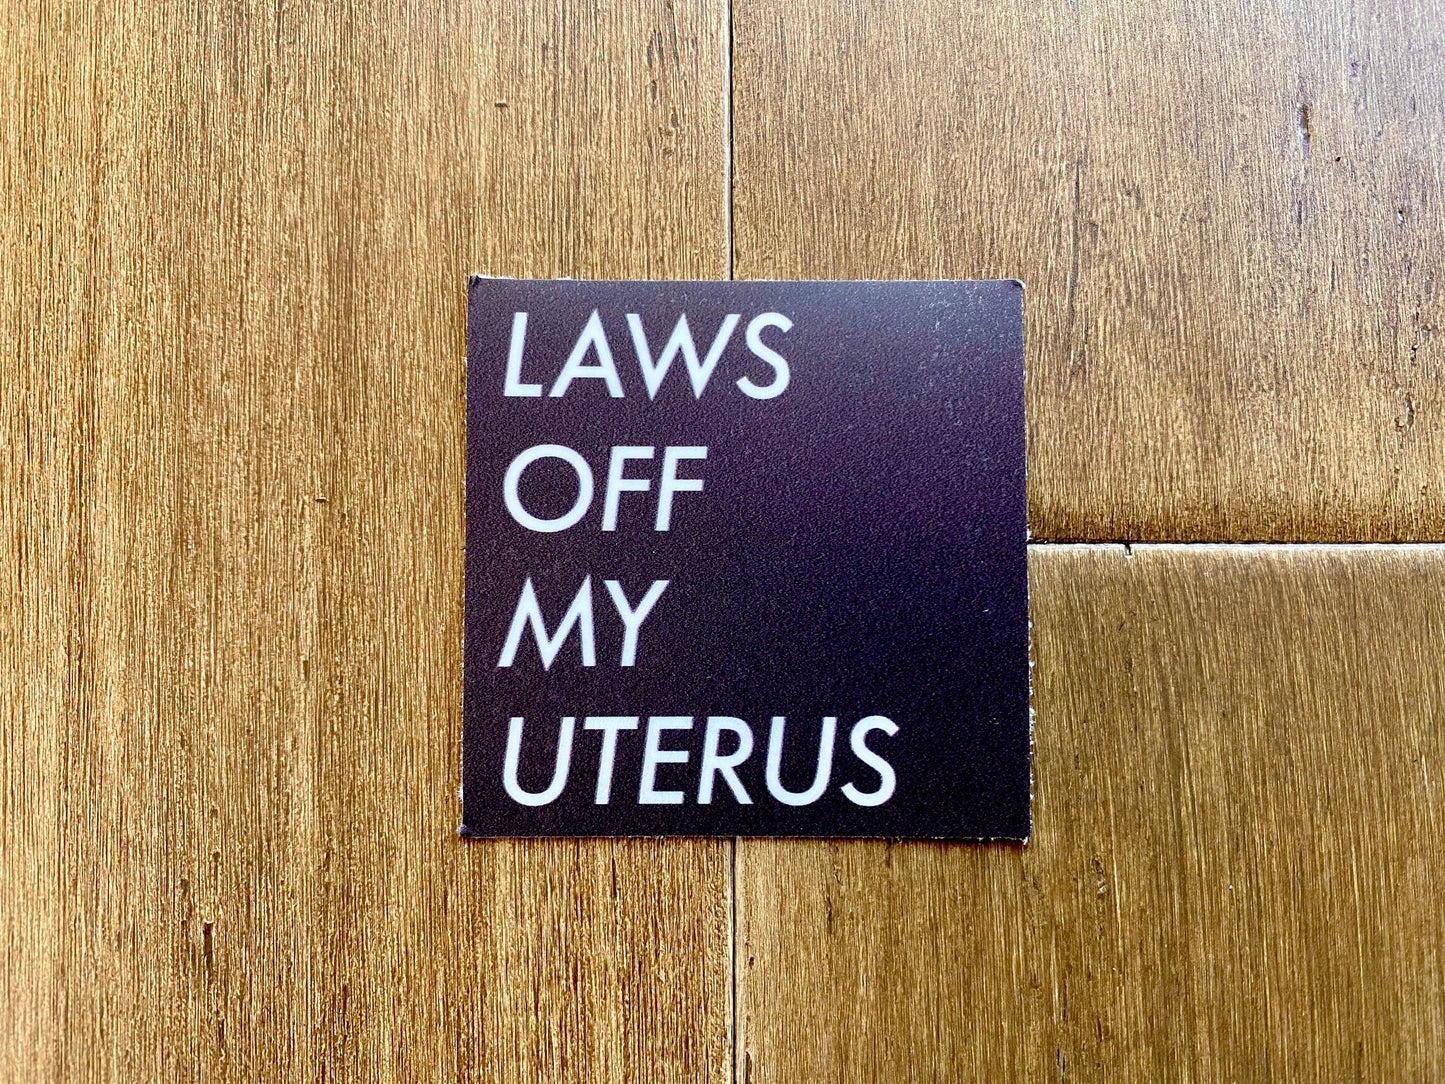 Laws Off My Uterus Square Black and White Vinyl Sticker